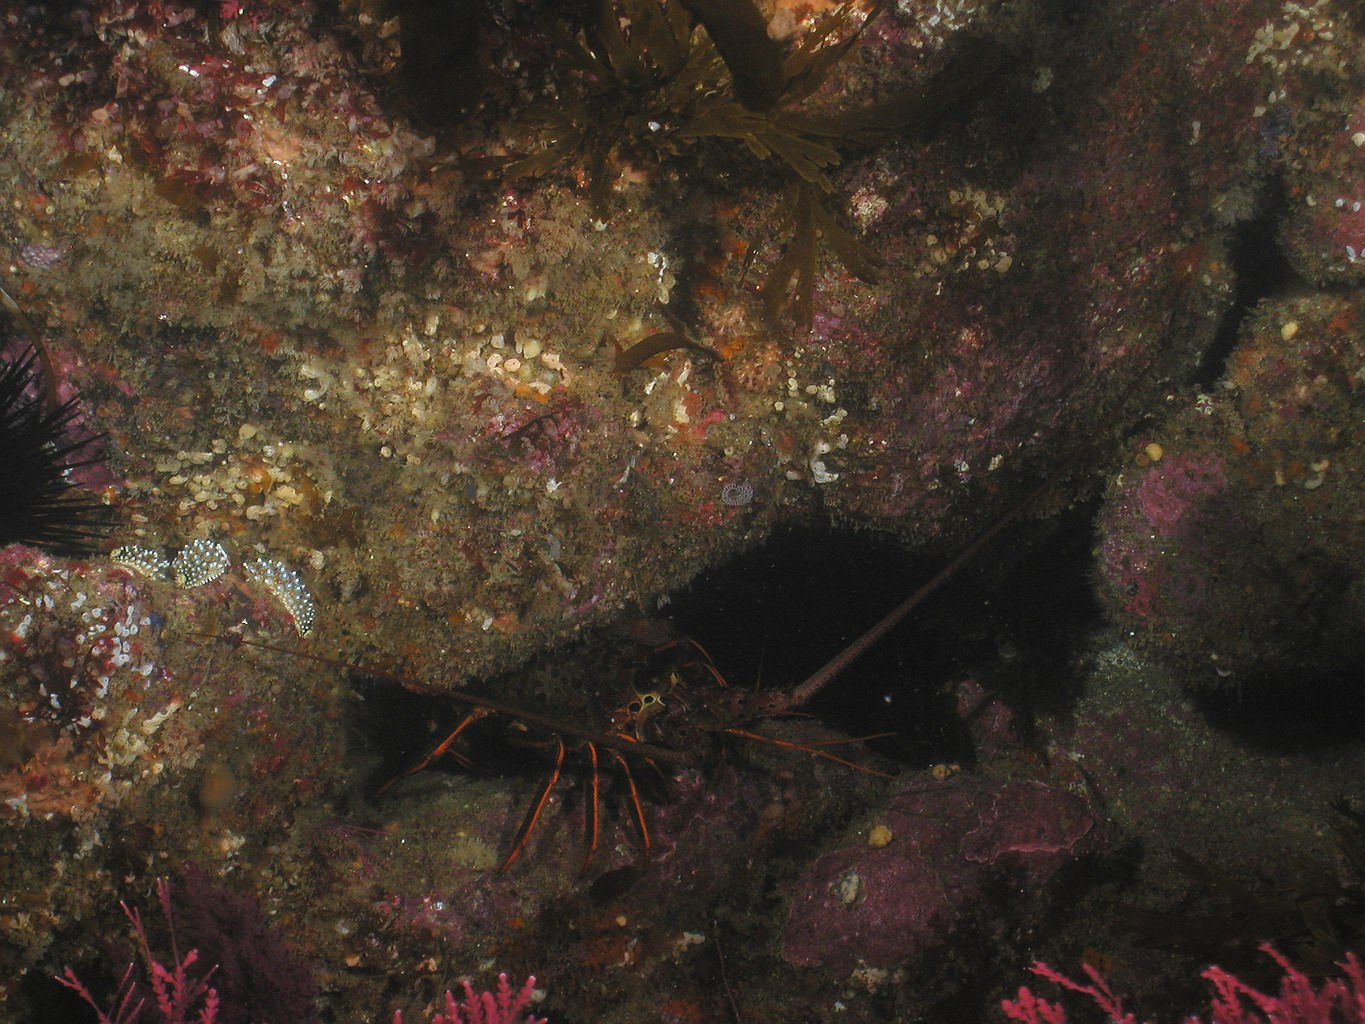 California Rock Lobster(Panulirus interruptus)